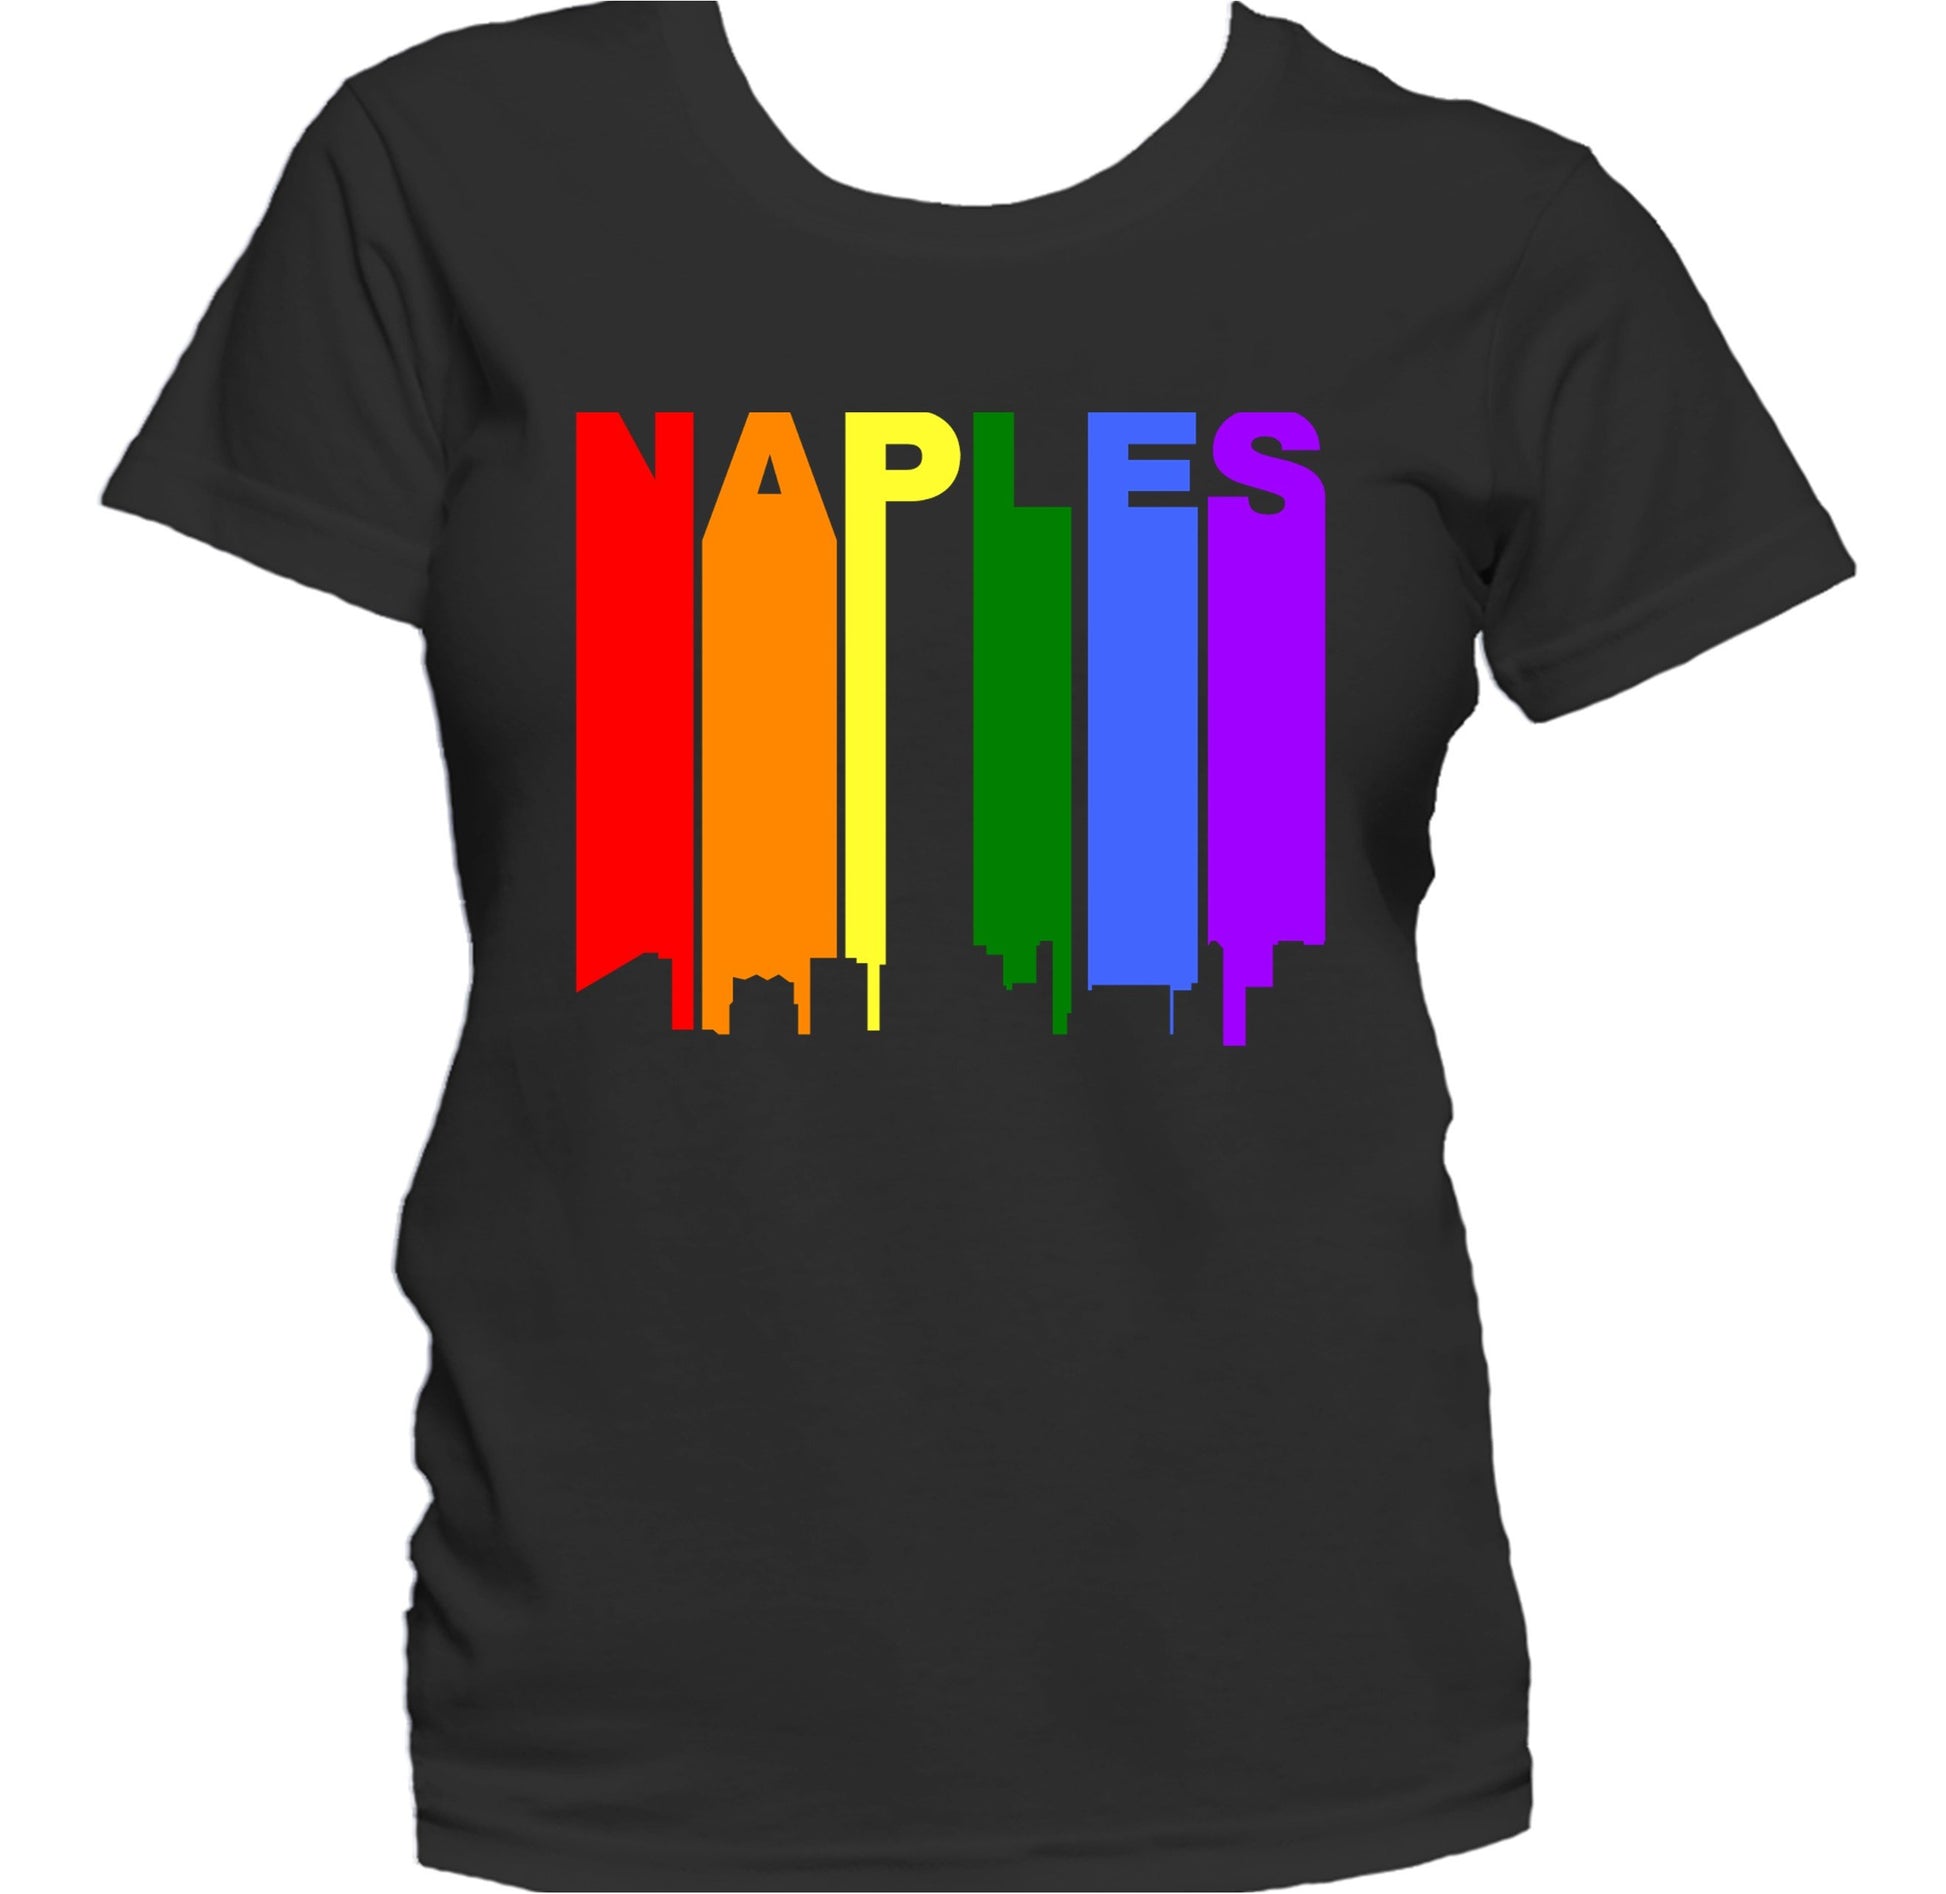 Naples Florida LGBTQ Gay Pride Rainbow Skyline Women's T-Shirt